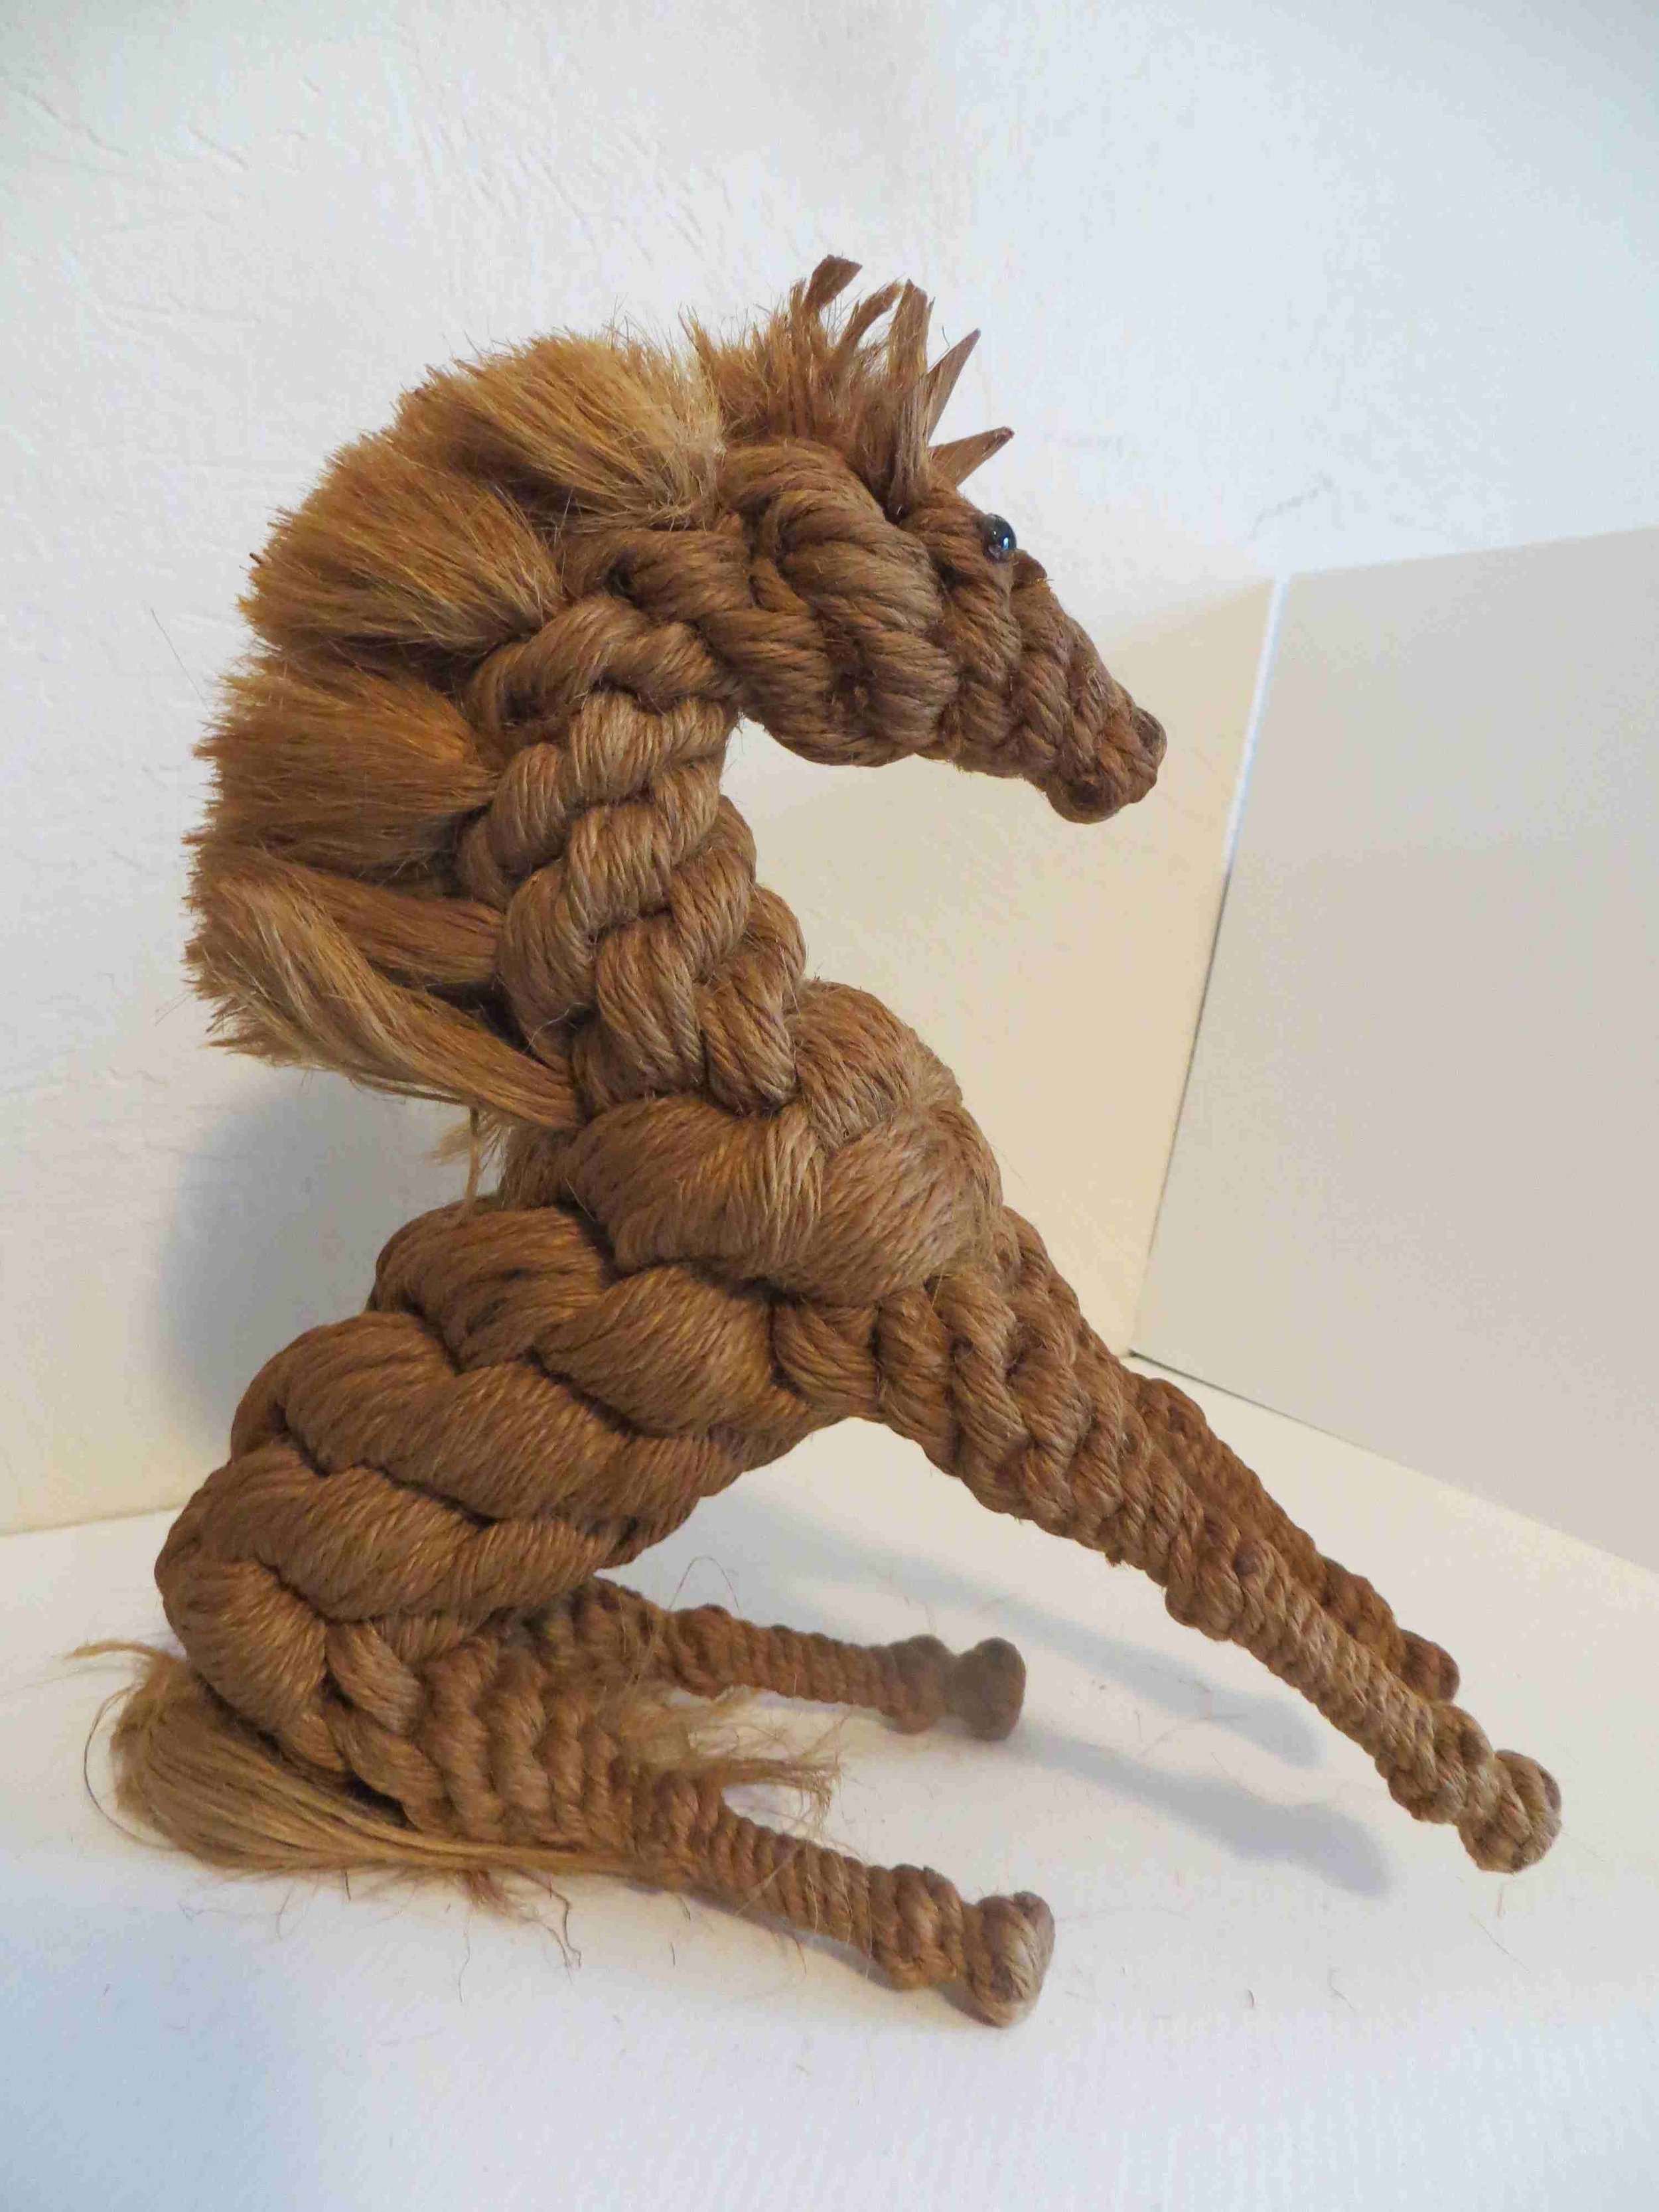 Twine Horse sculpture by Raiford FL INmate ARtist-021.jpg